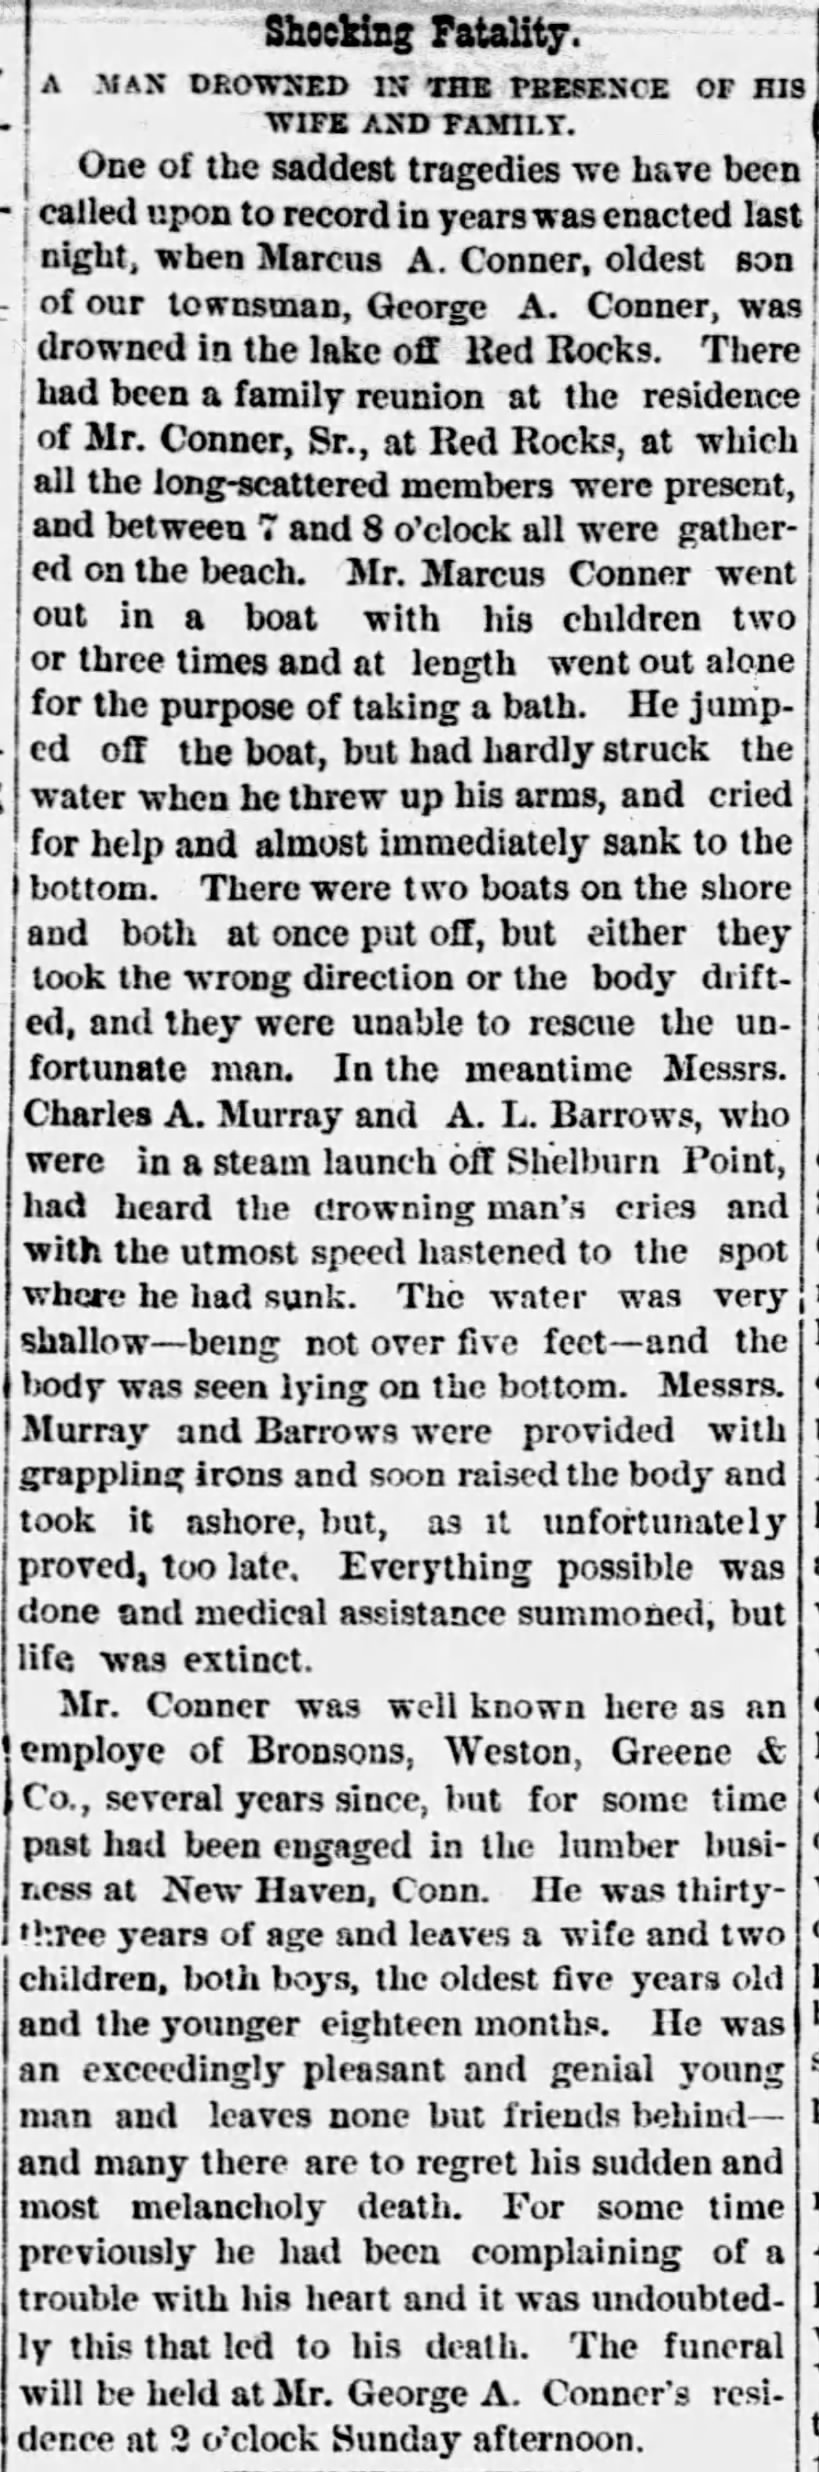 Shocking Fatality. The Burlington Free Press (Burlington, Vermont) 9 July 1881, p 3